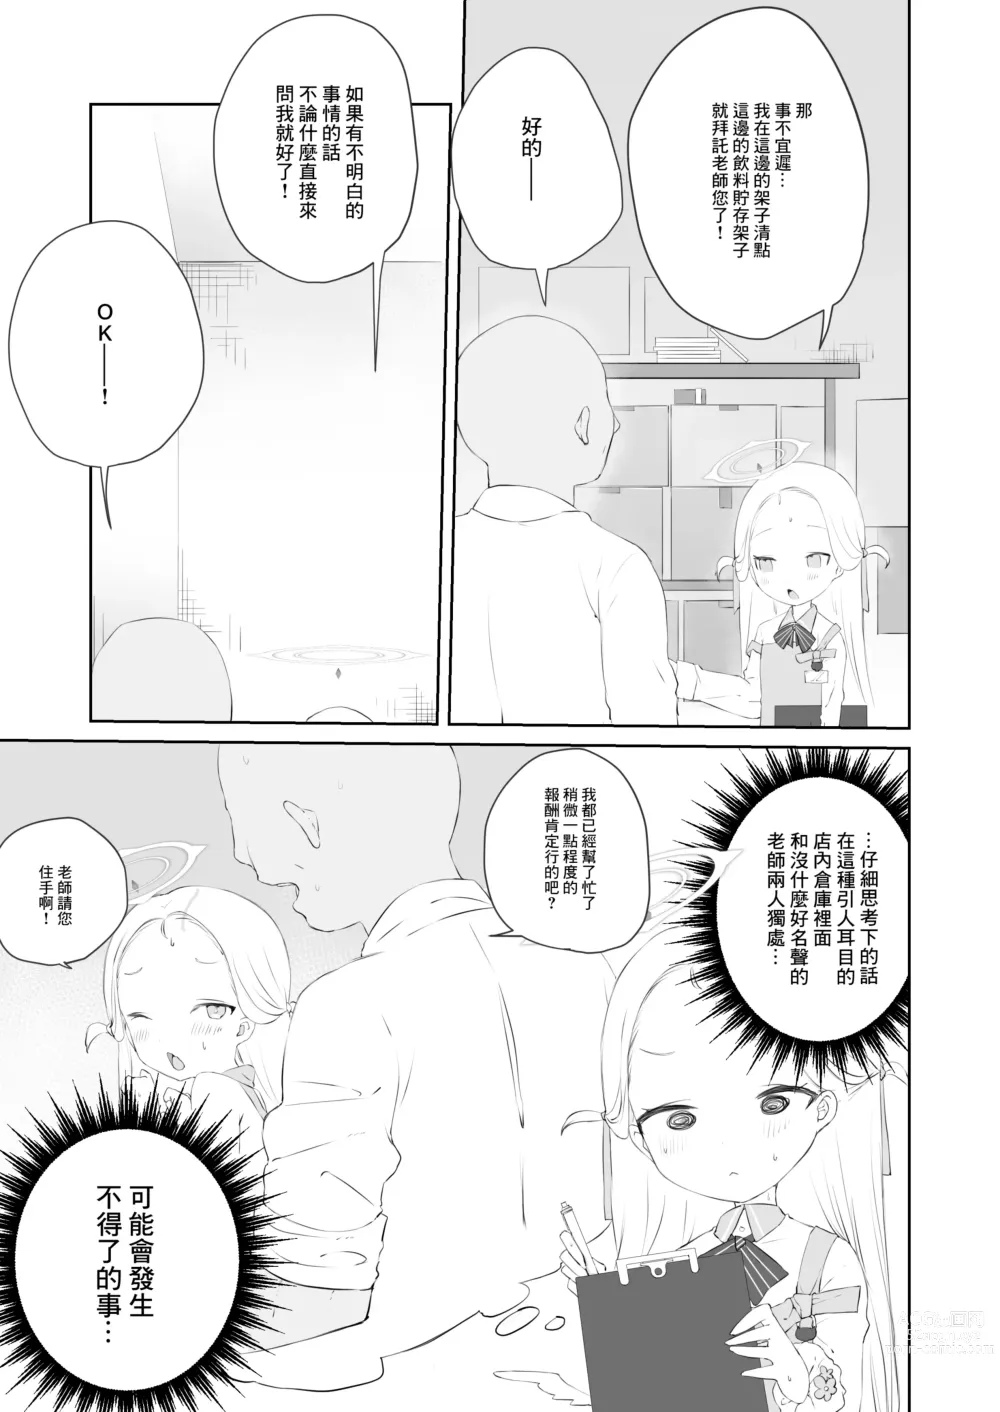 Page 7 of doujinshi 老師請你把我的尿尿給全部喝下去吧